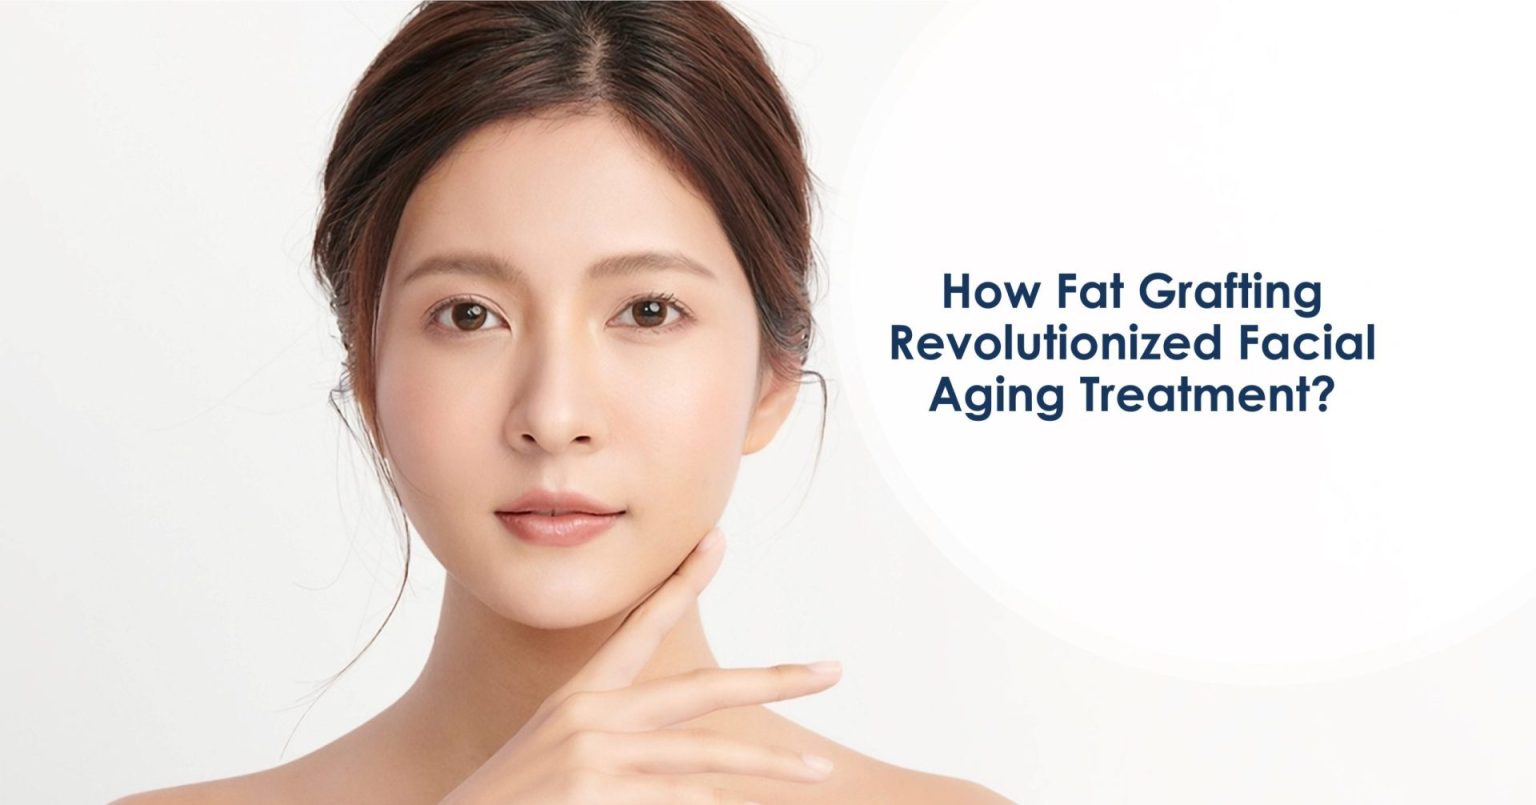 How fat grafting revolutionized facial aging treatment